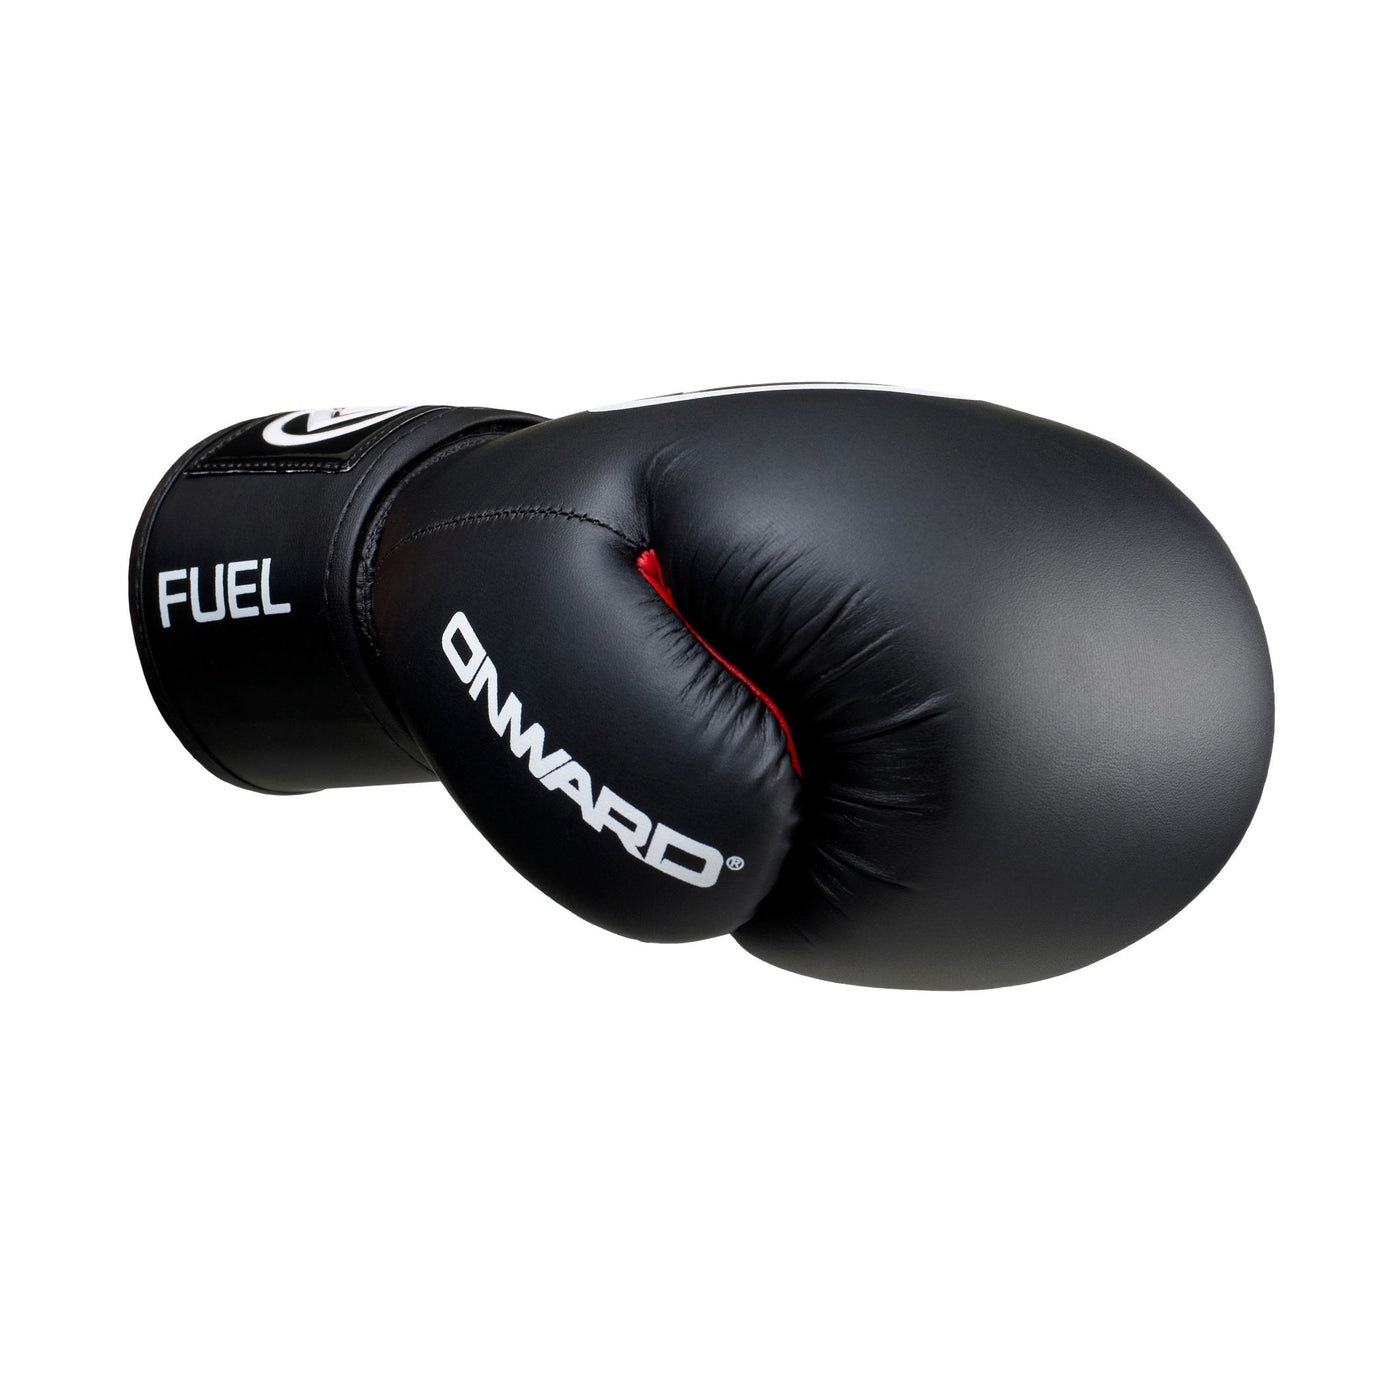 Fuel Boxing Glove - Onward Online - 2AA007-089-10OZ